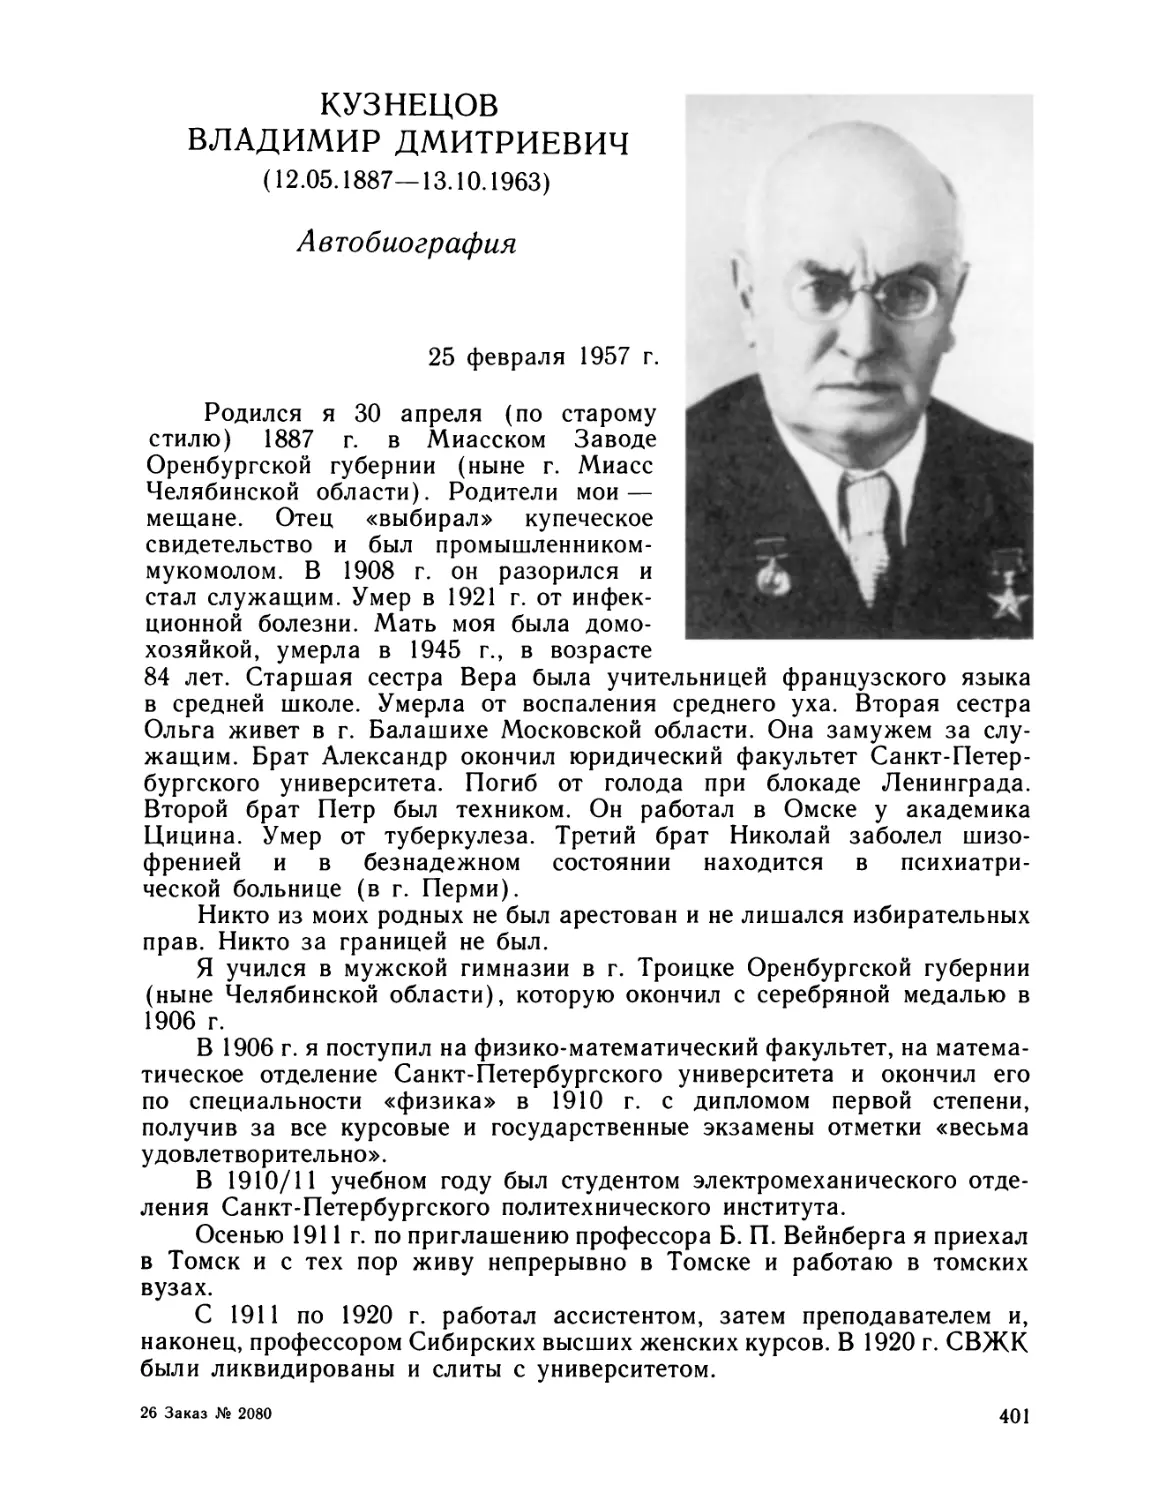 Кузнецов Владимир Дмитриевич